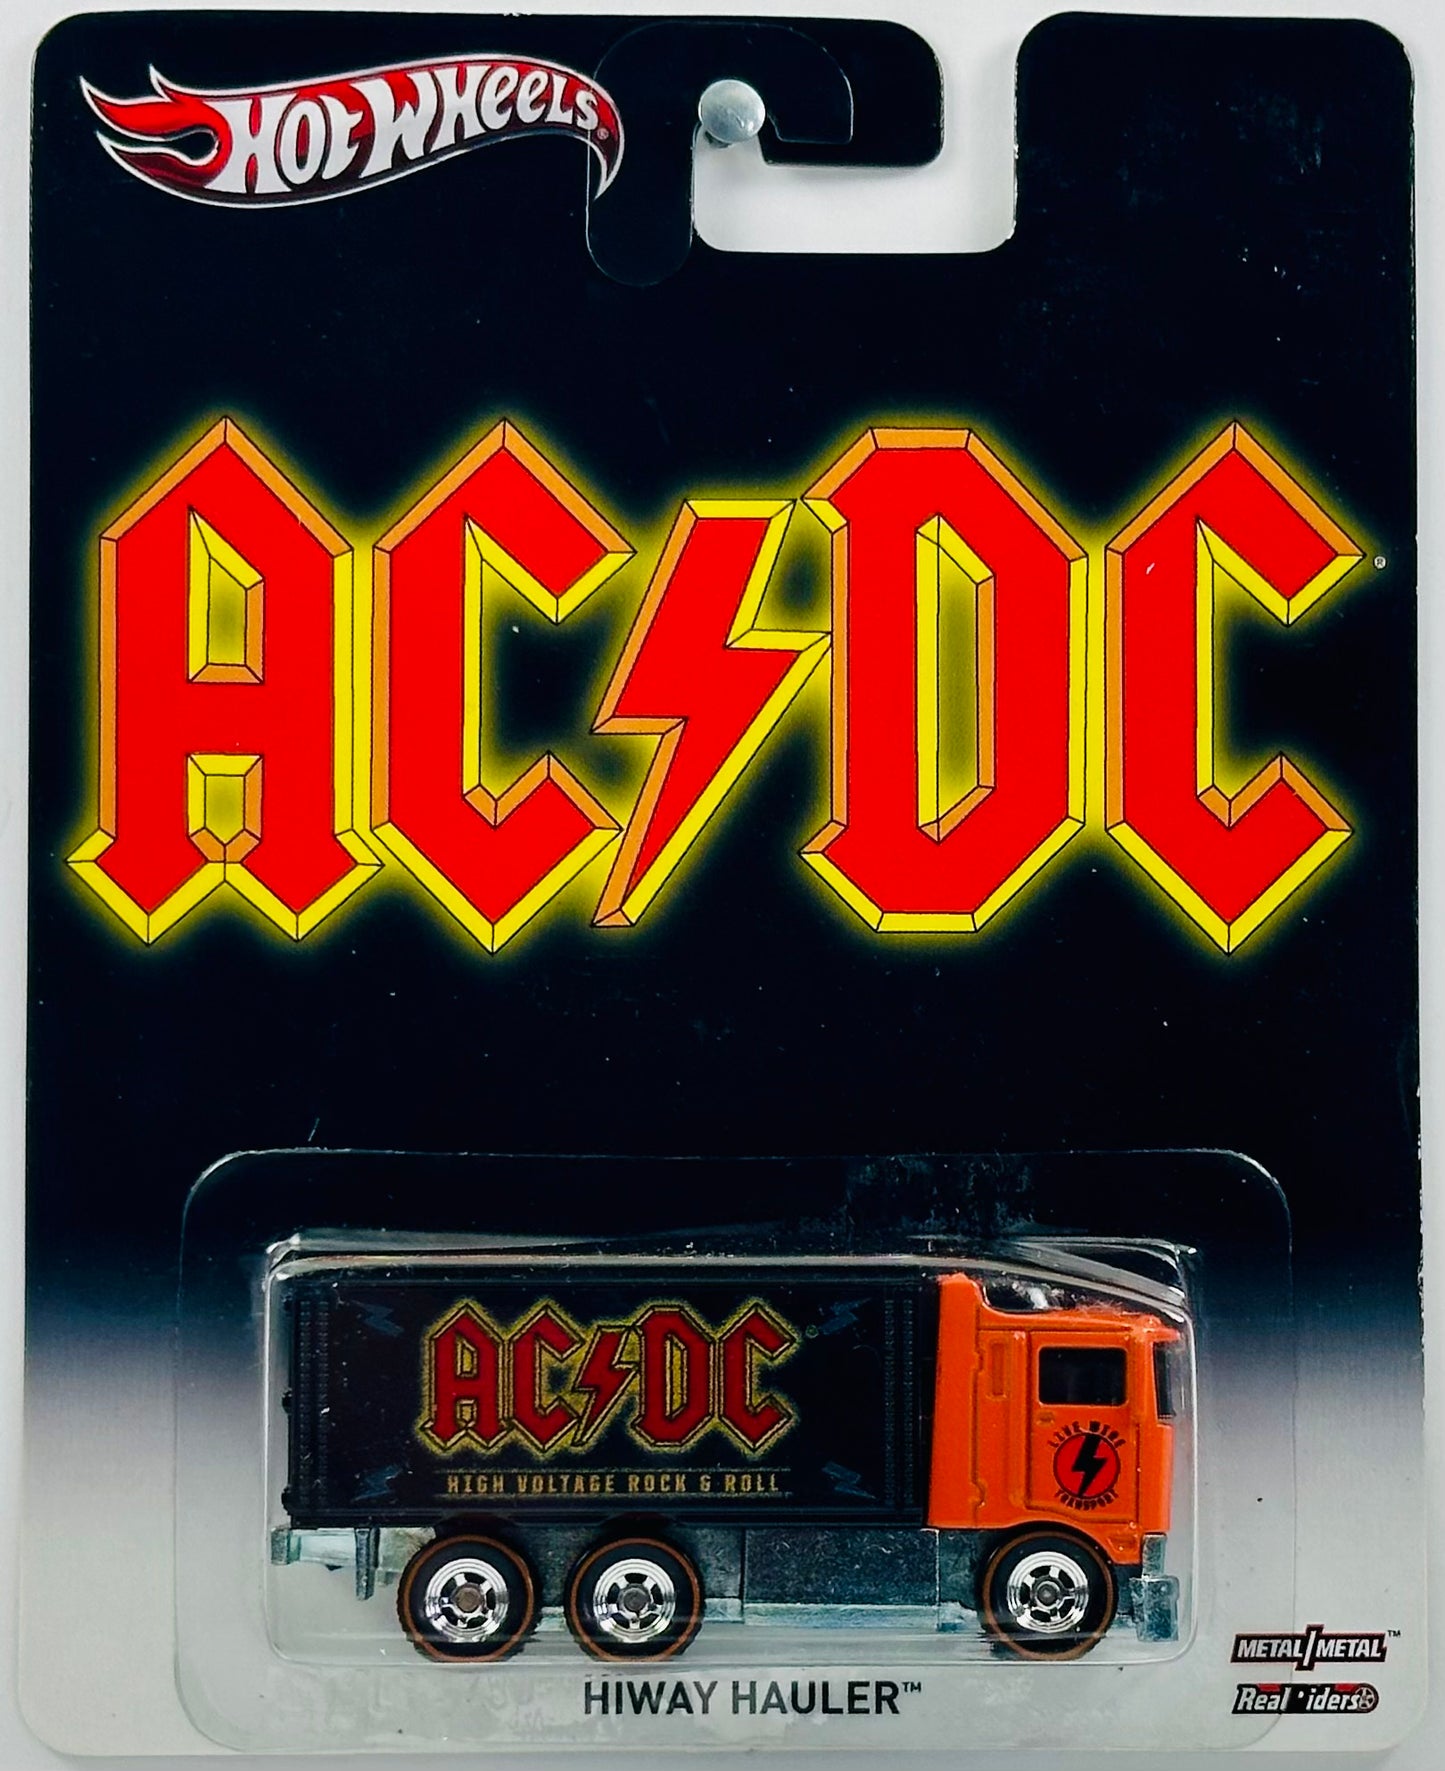 Hot Wheels 2013 - Pop Culture: Live Nation - Hiway Hauler - Orange & Black - 'High Voltage Rock & Roll' - AC/DC - Metal/Metal & Real Riders